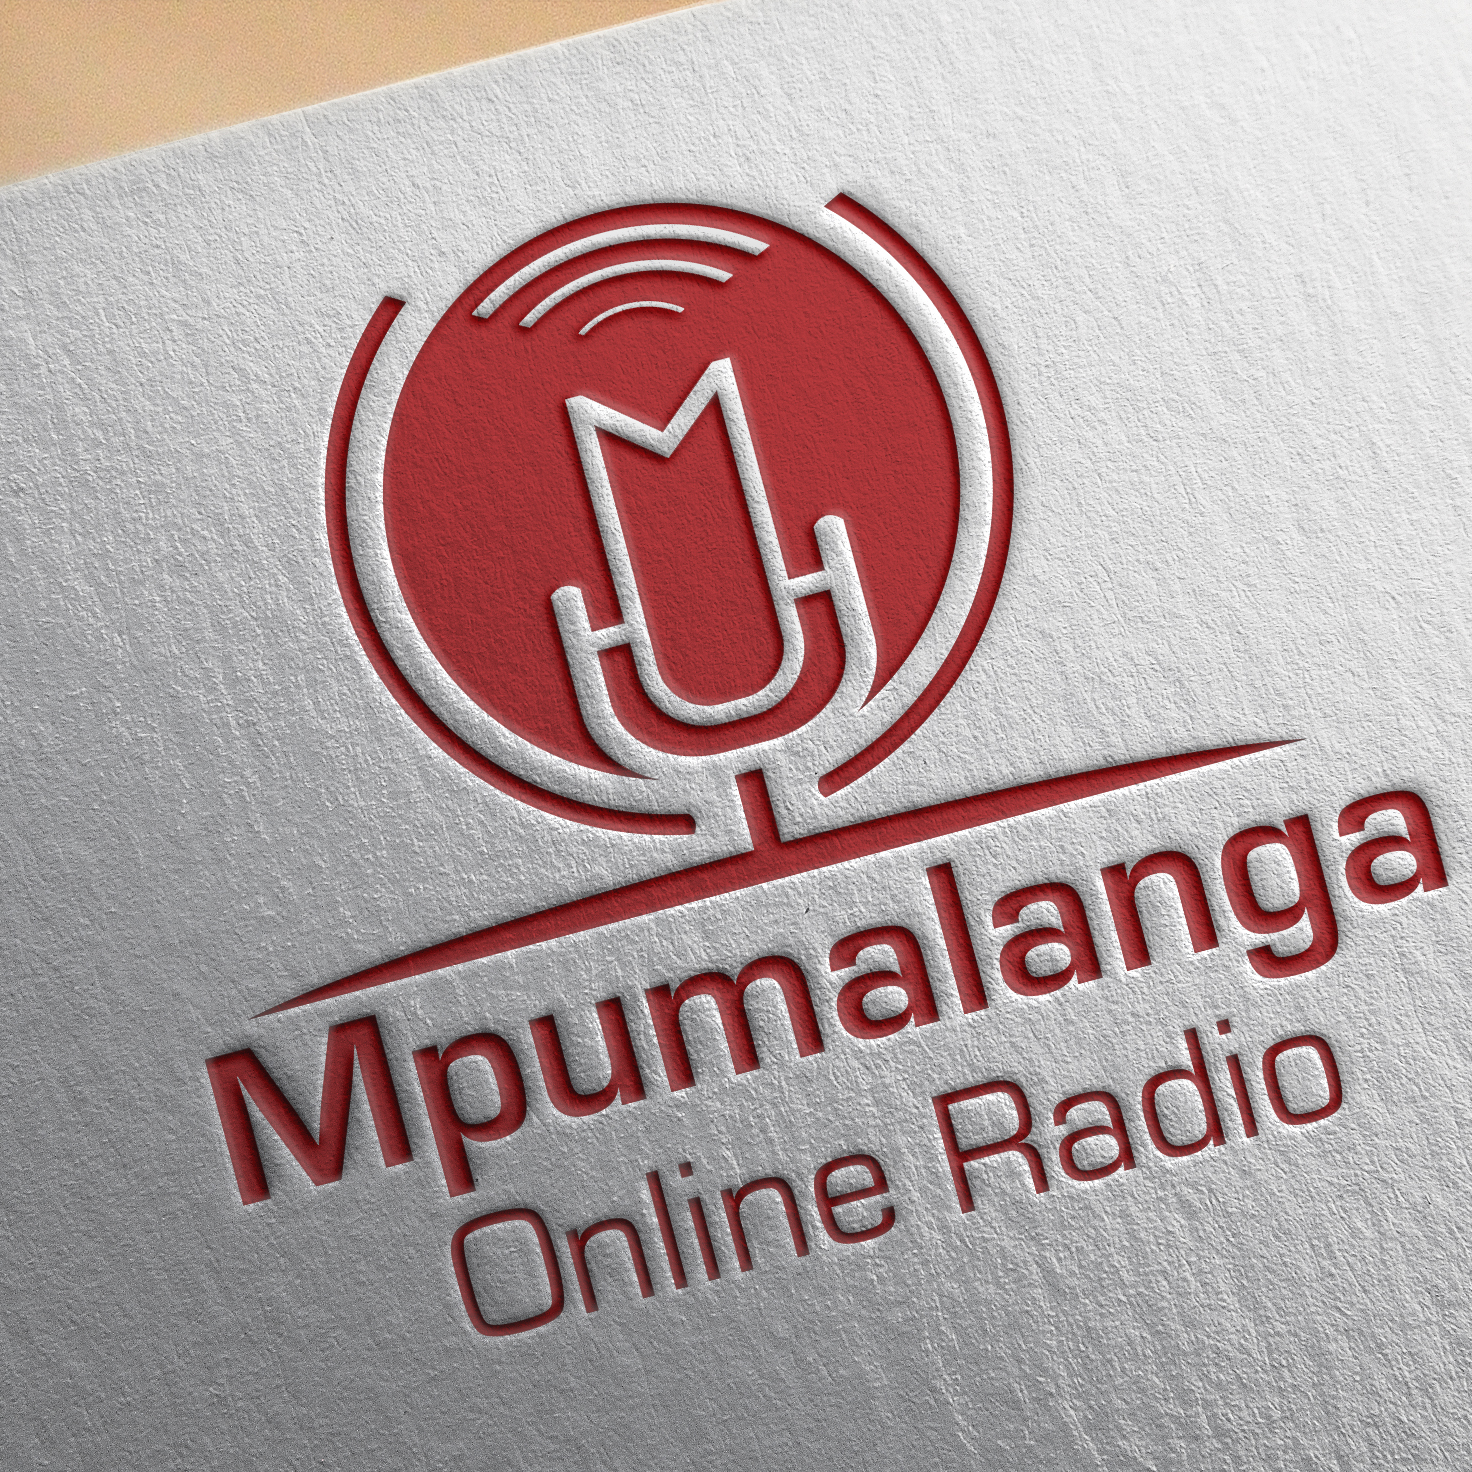 Mpumalanga Online Radio